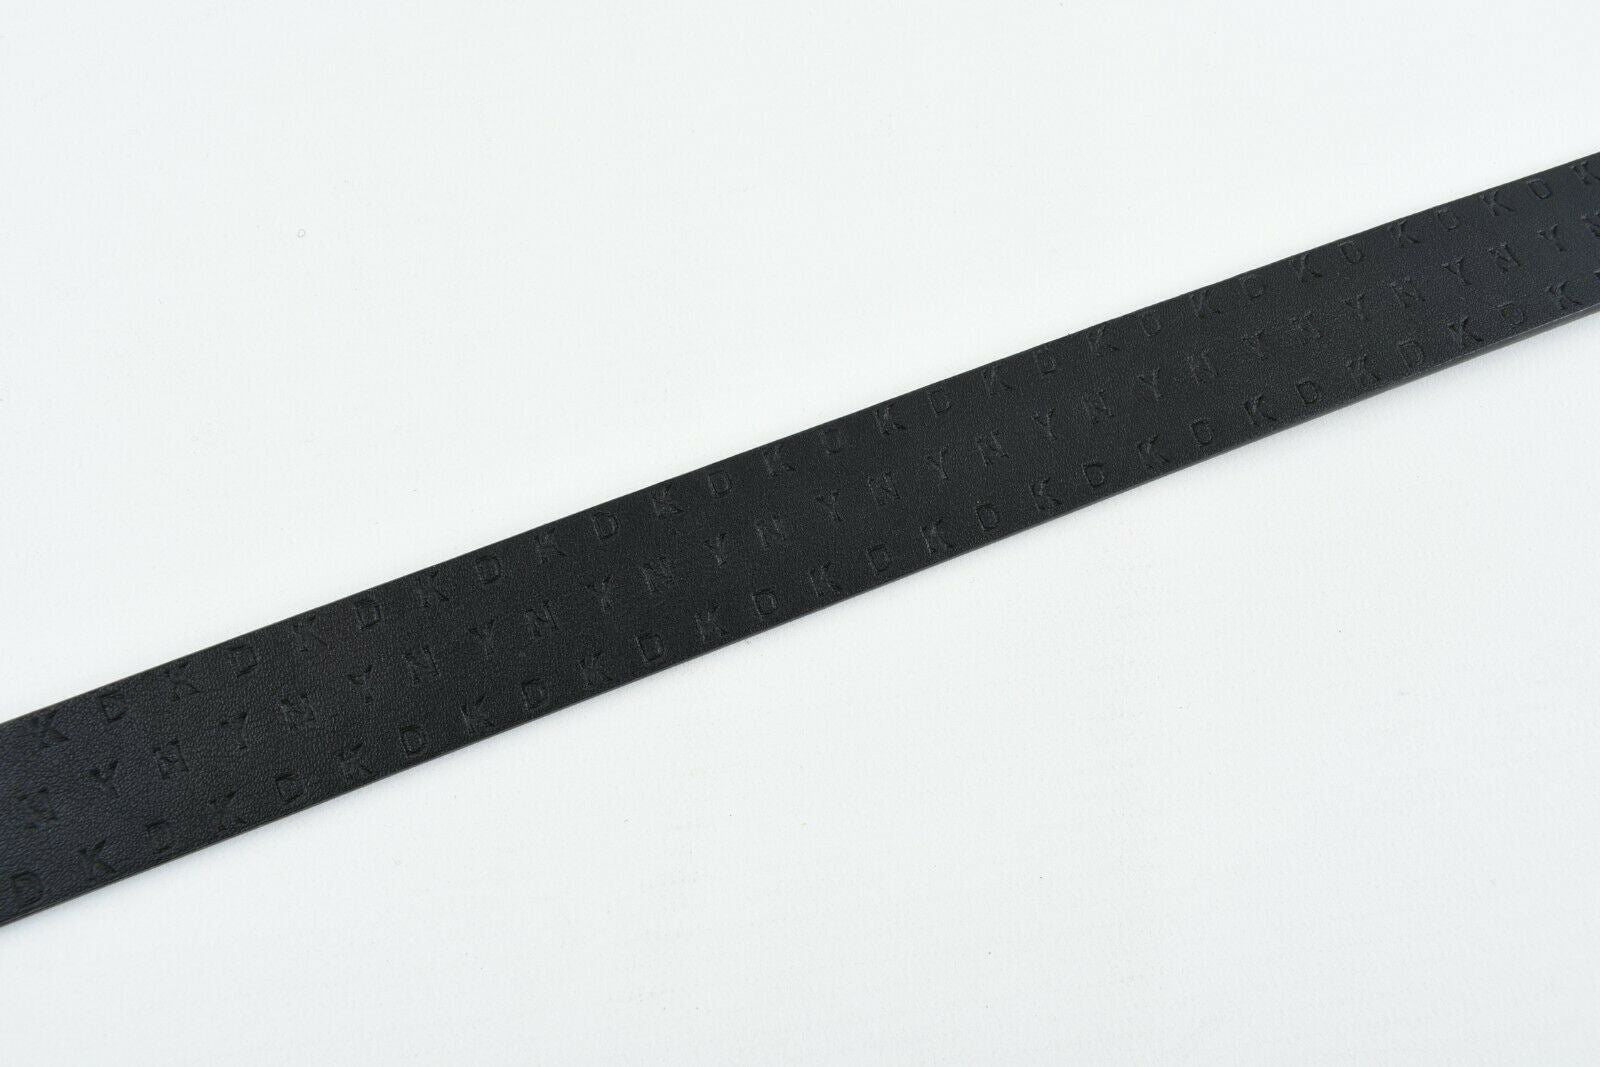 DKNY Women's Faux Leather Reversible Belt, Black/Brown, 1" wide, size M